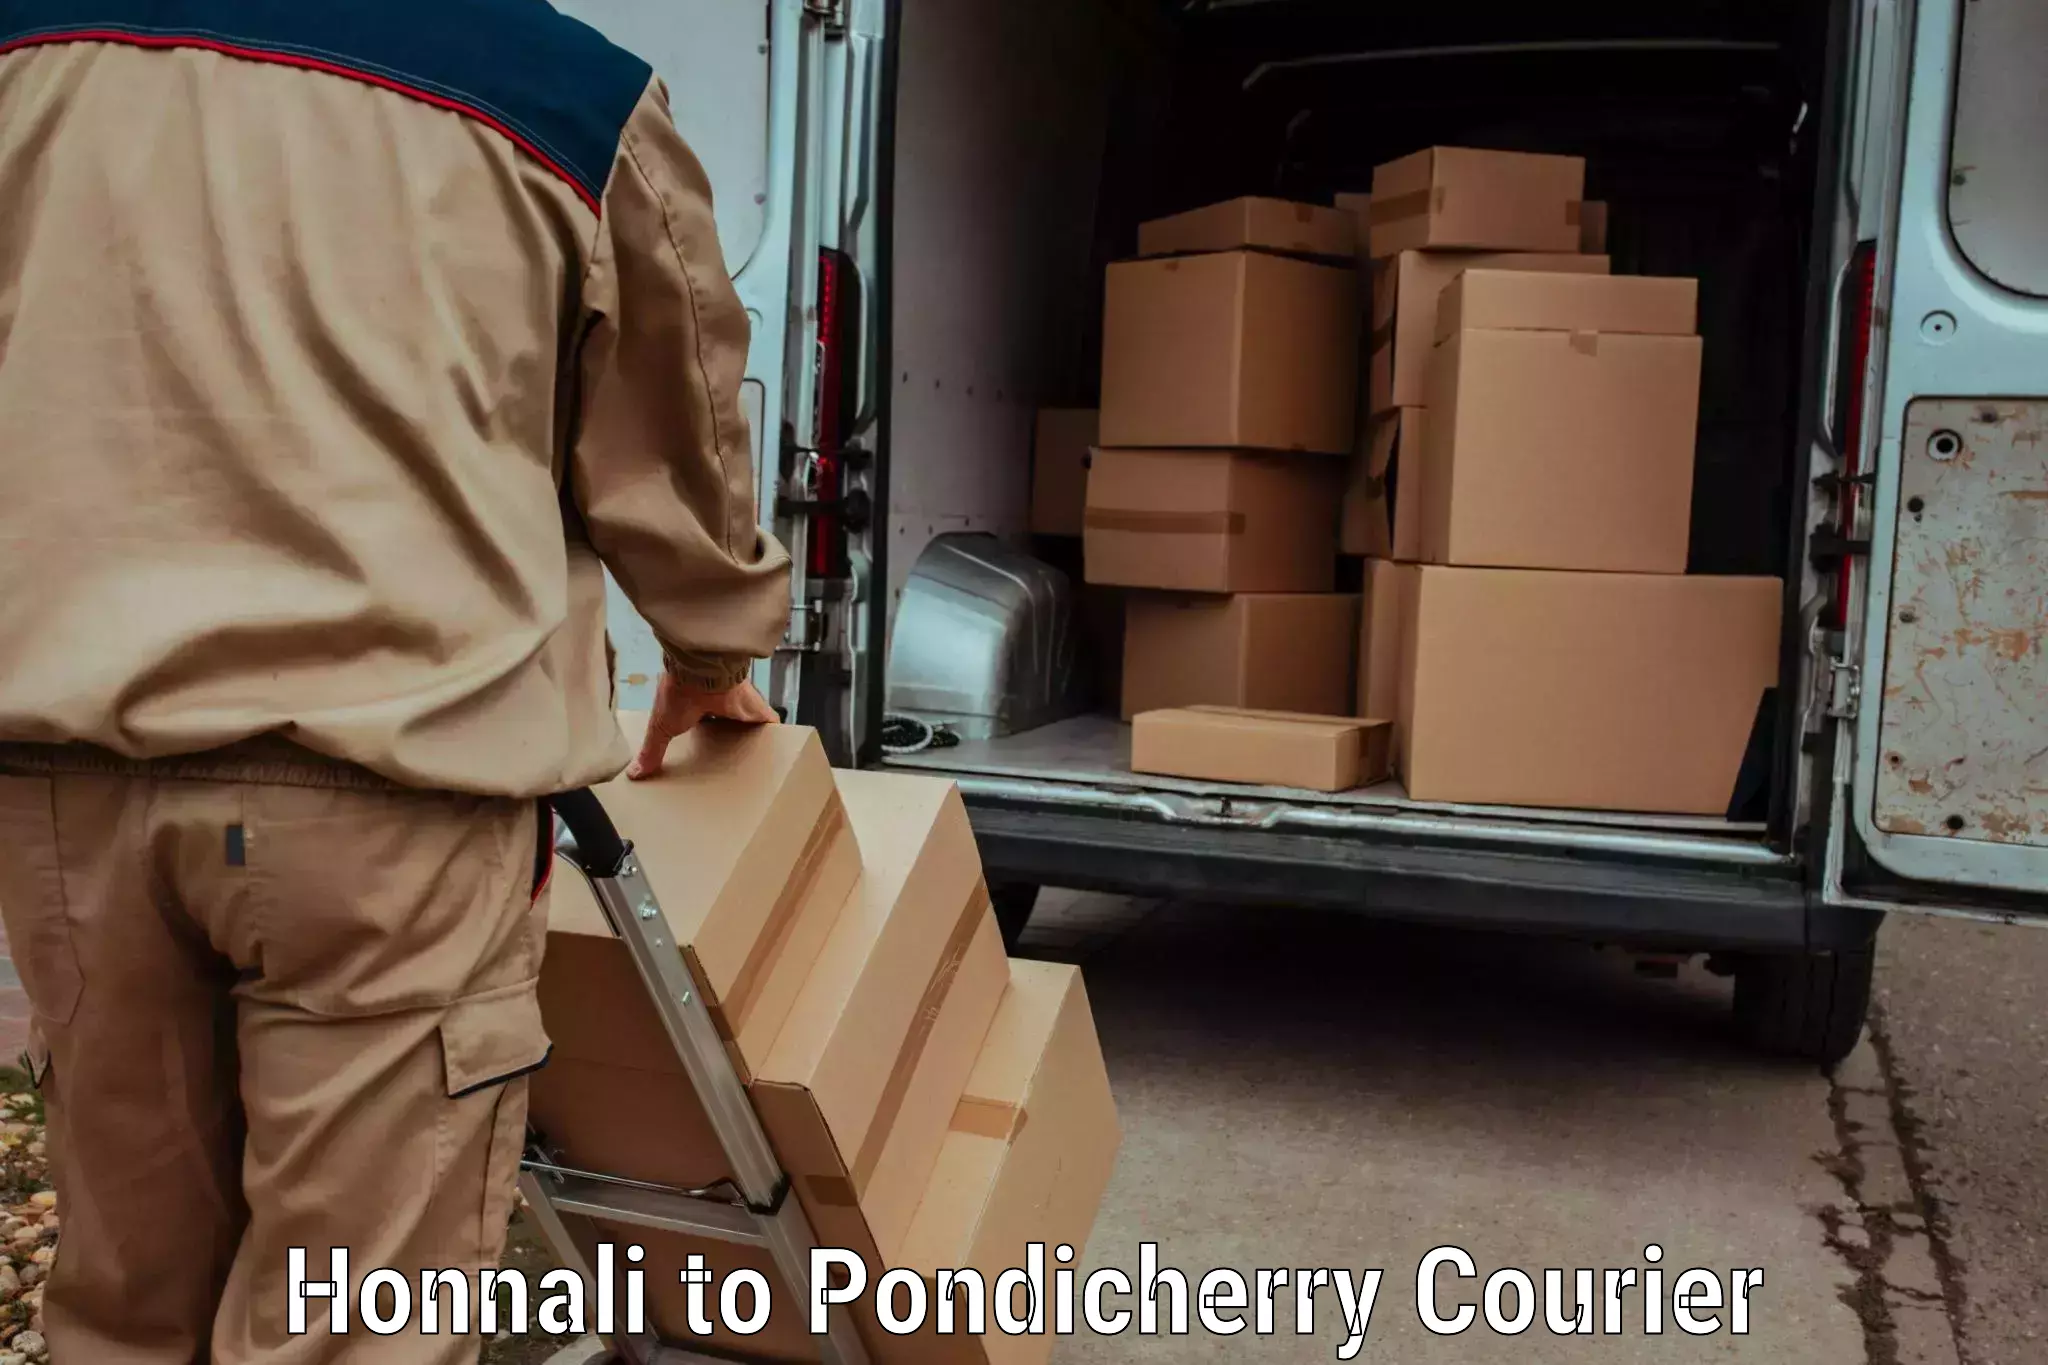 Modern delivery methods Honnali to Pondicherry